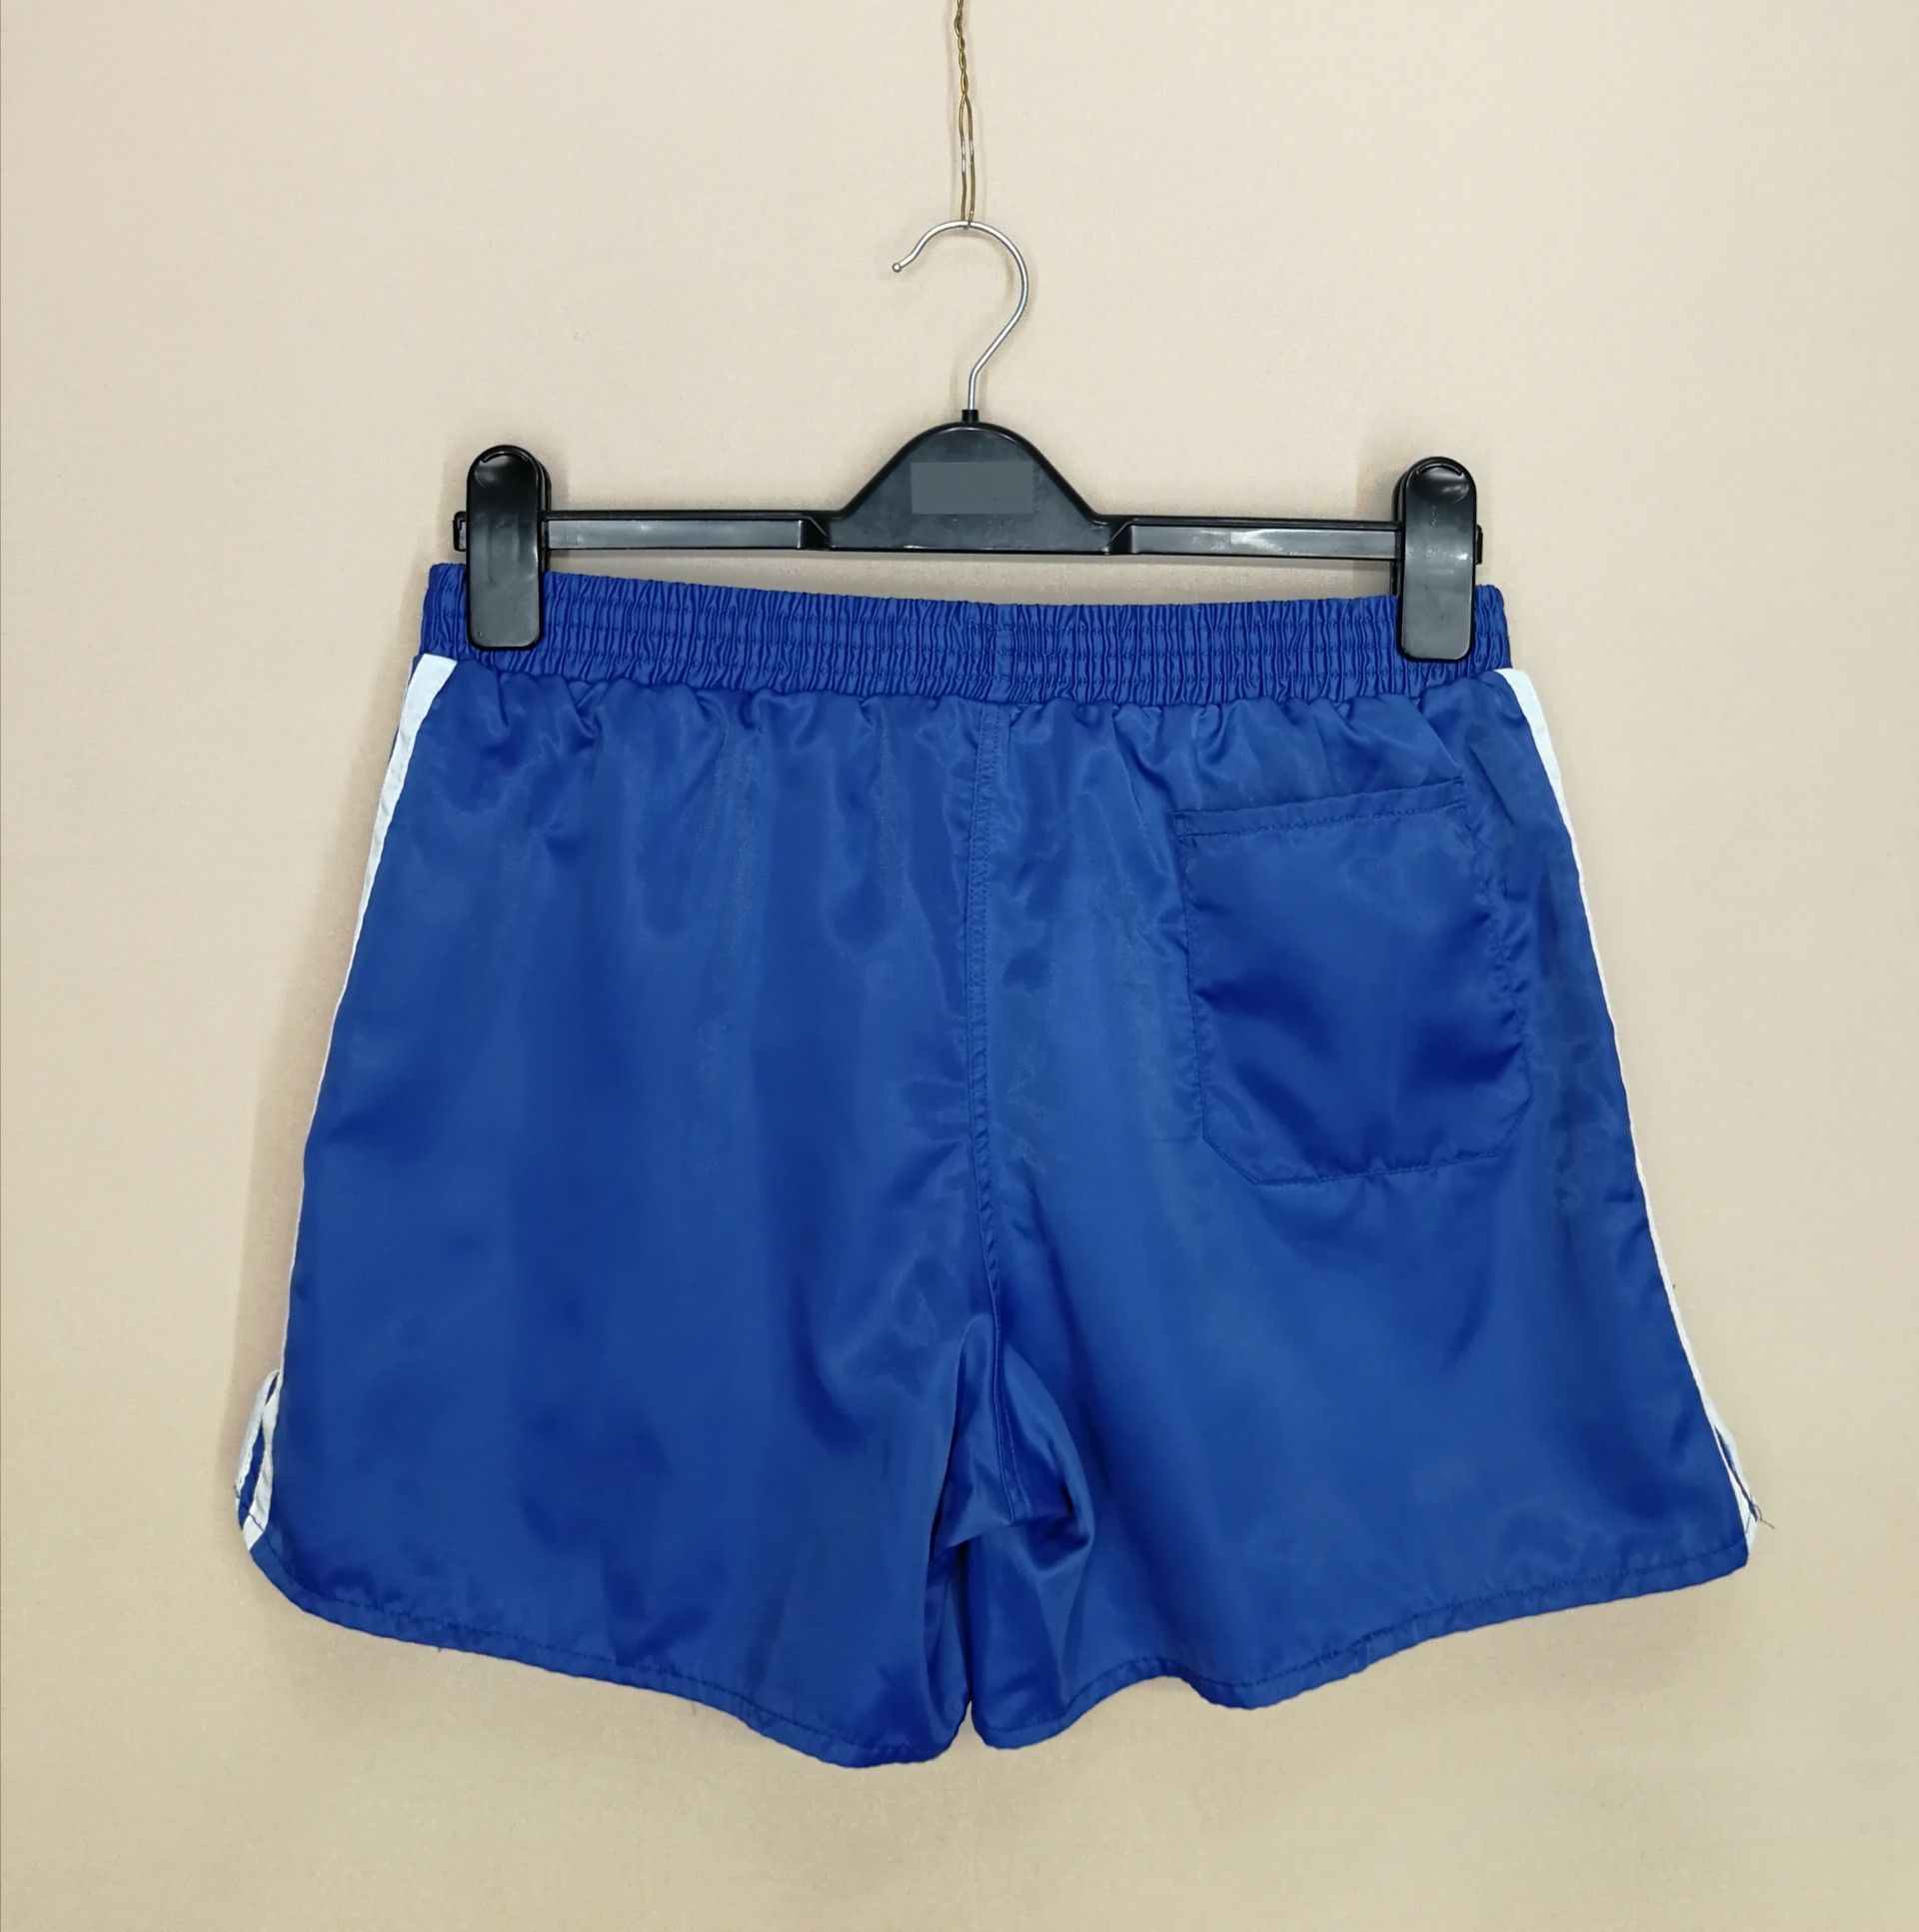 Adidas Vintage 80's Adidas Shorts Blue Yugoslavia Size US 32 / EU 48 - 5 Thumbnail